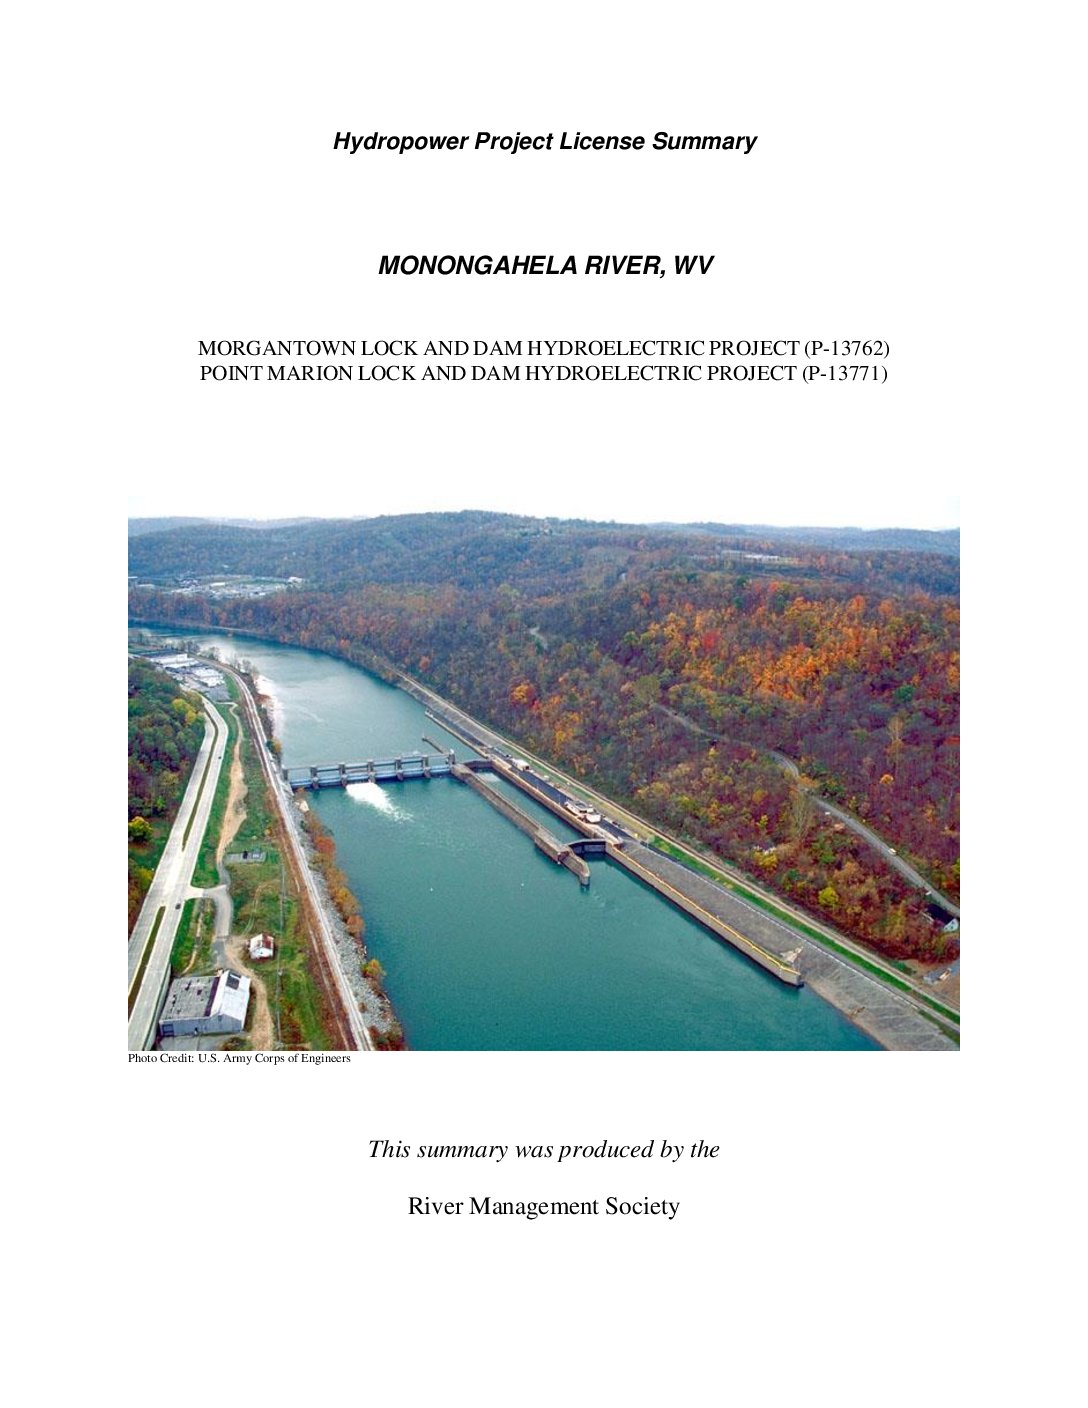 Monongahela River Projects, Monongahela River, West Virginia